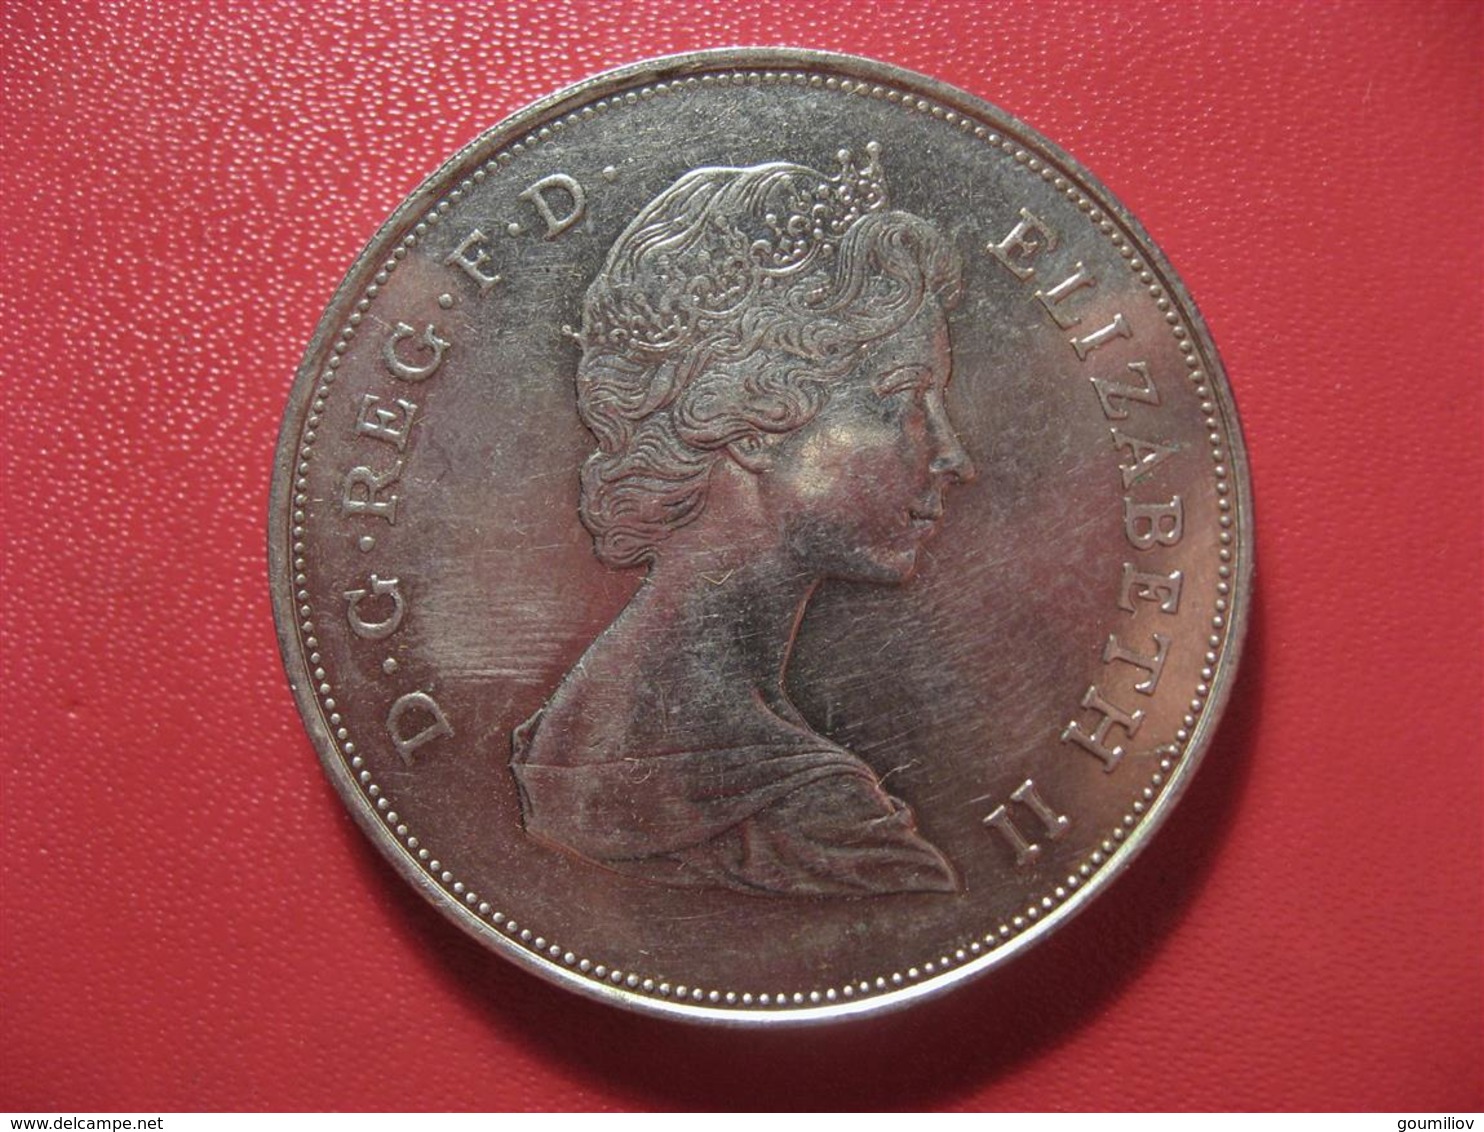 Grande-Bretagne - UK - 25 New Pence 1981 3004 - 25 New Pence